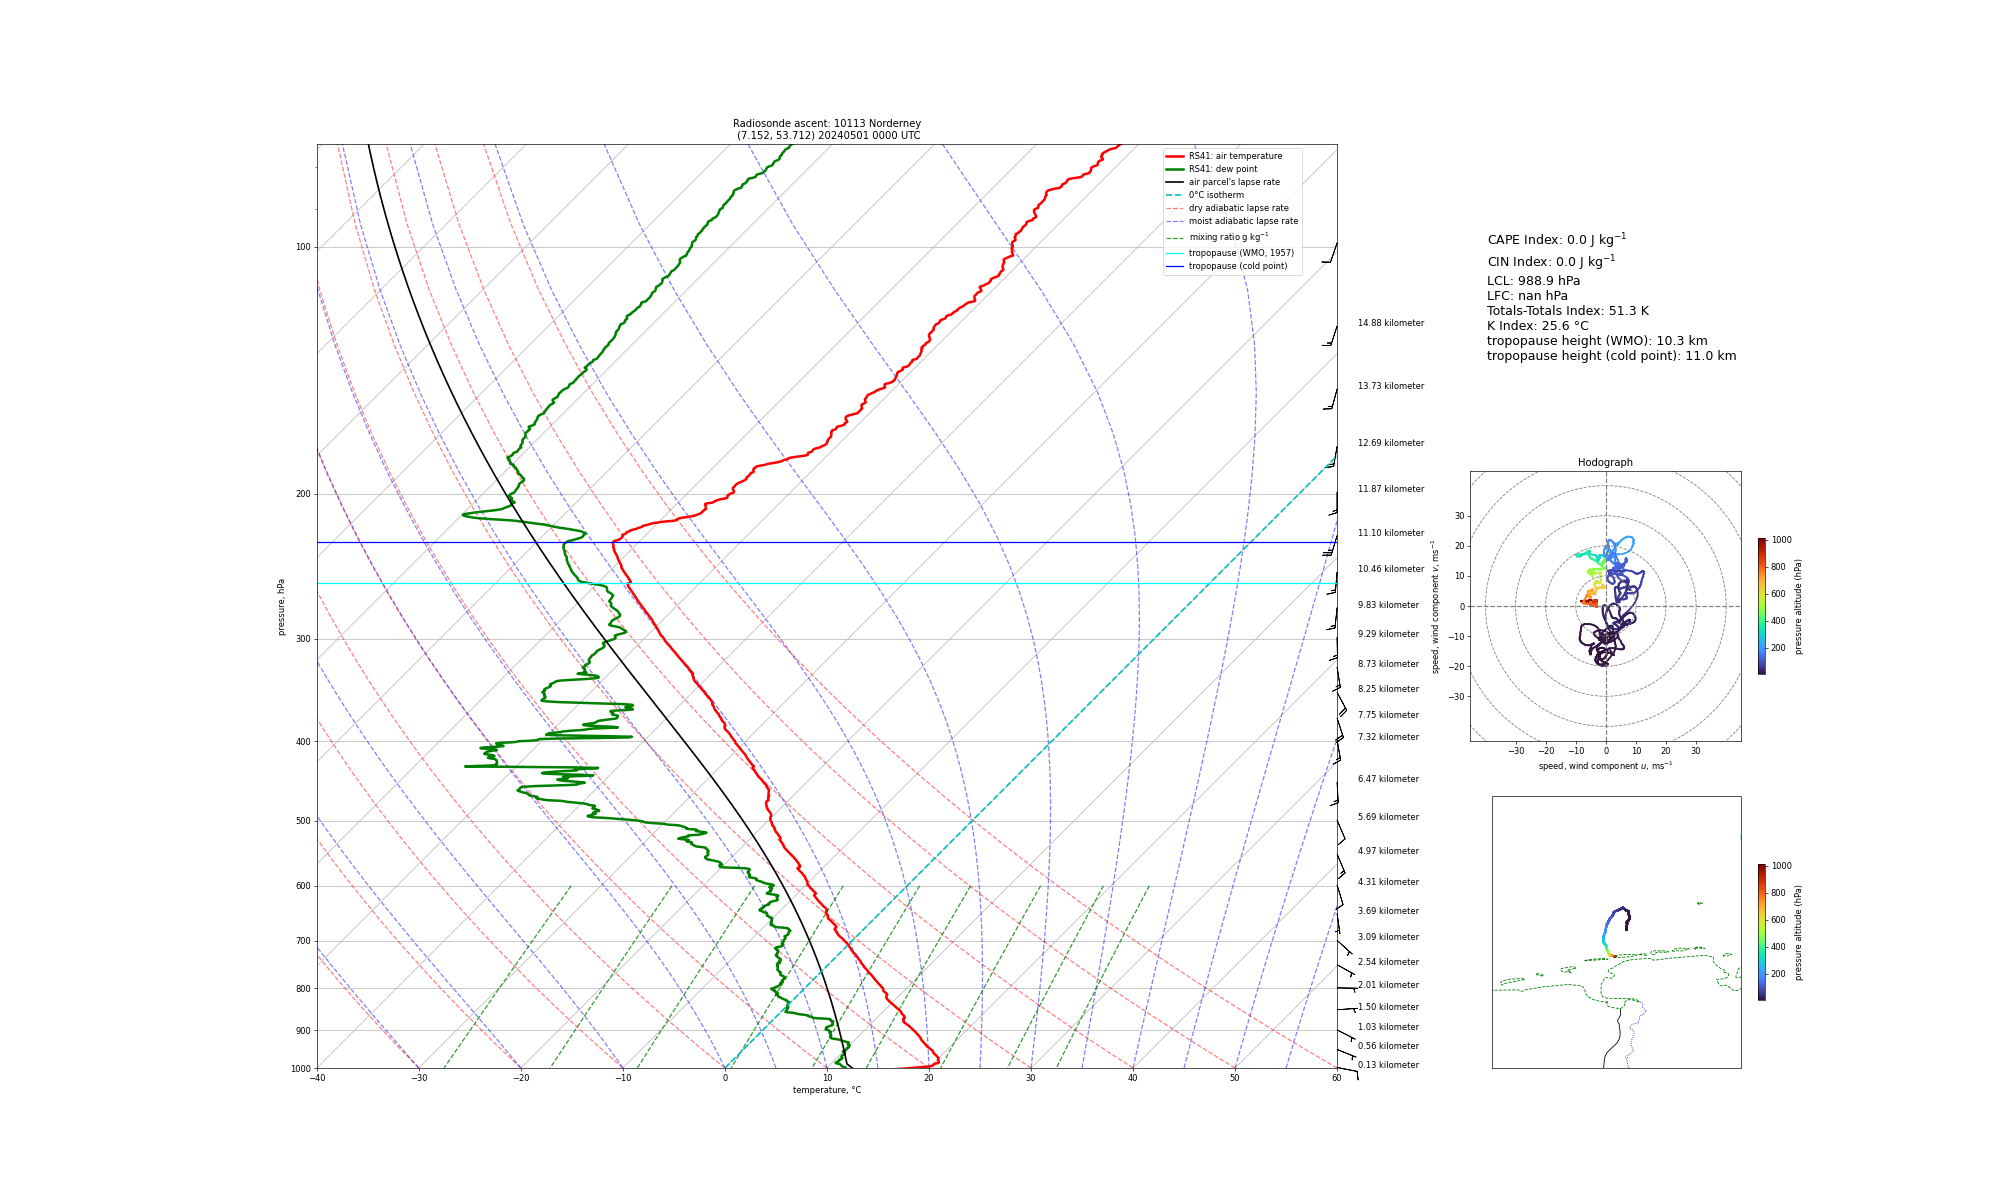 Visualisation of the radiosounding profile at Norderney at 0000 UTC